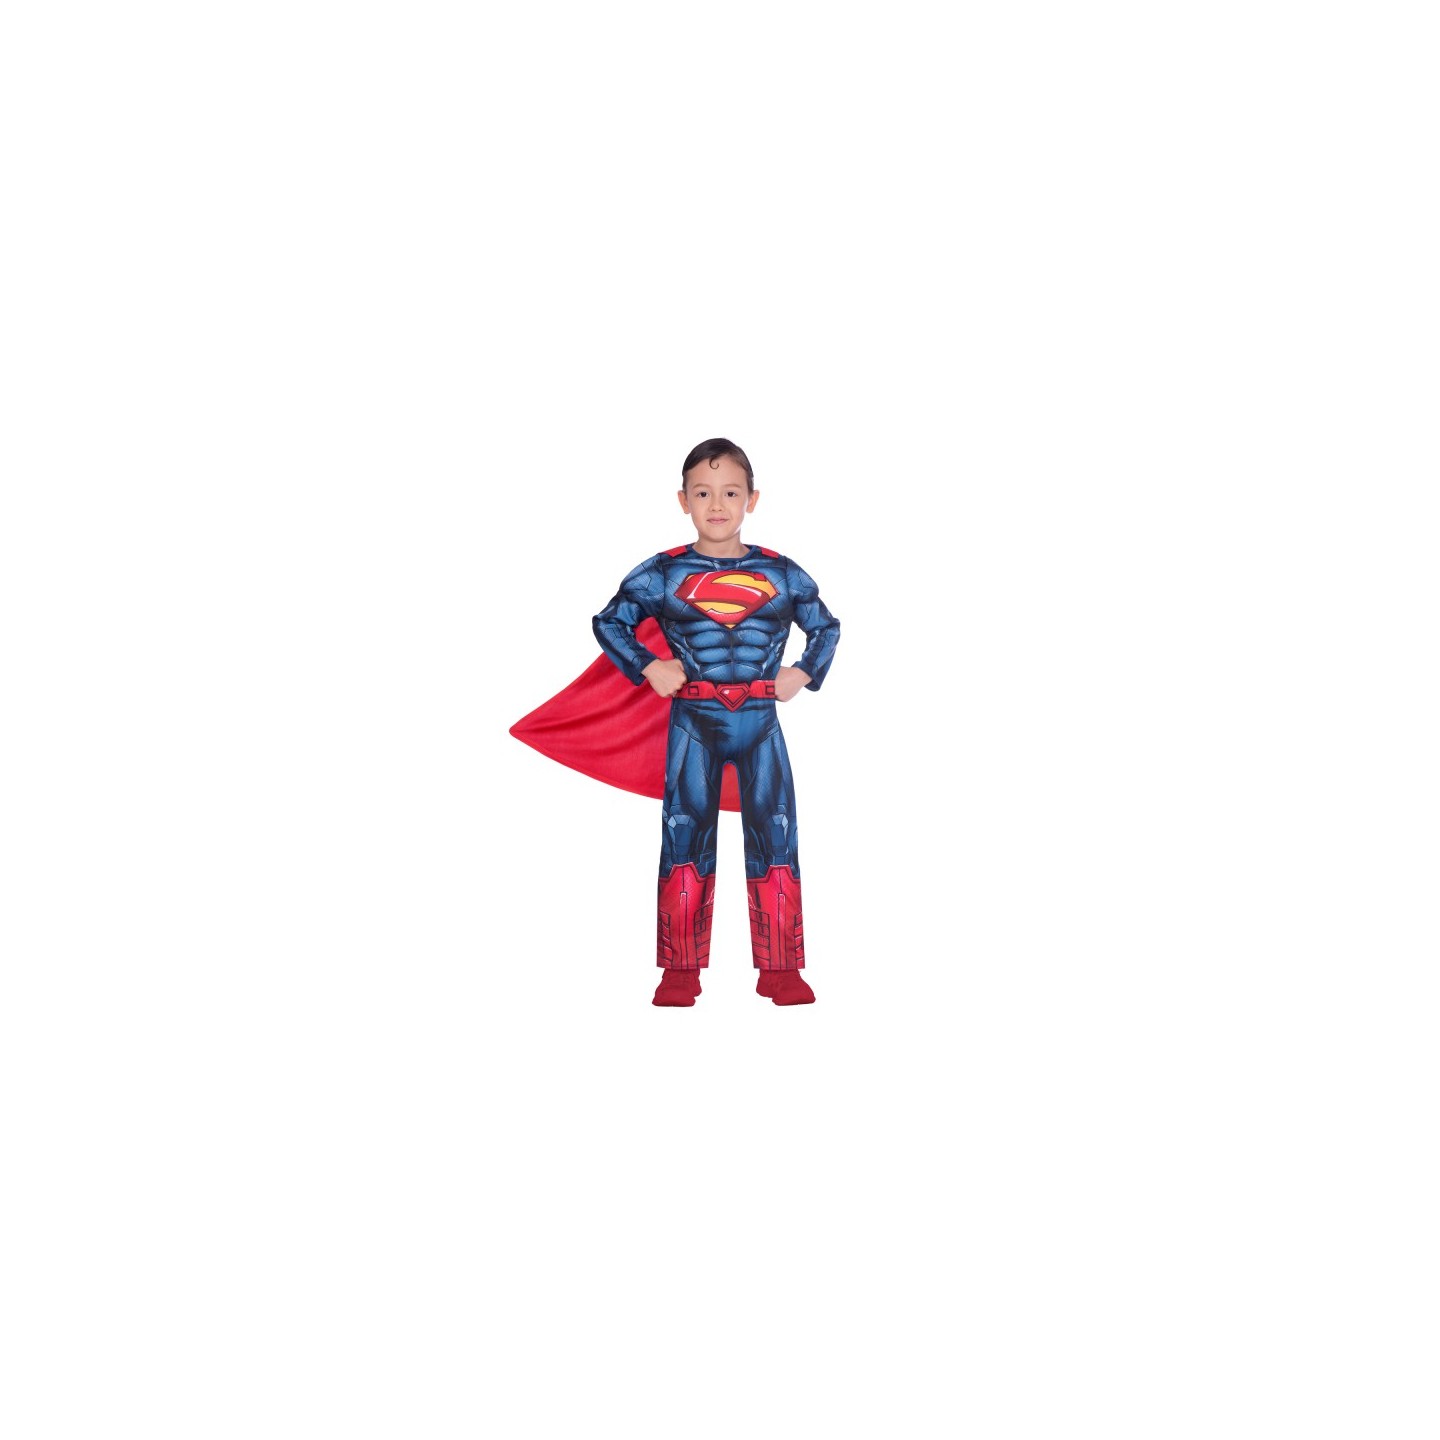 Superman pak kind bestellen ? | Jokershop kleding